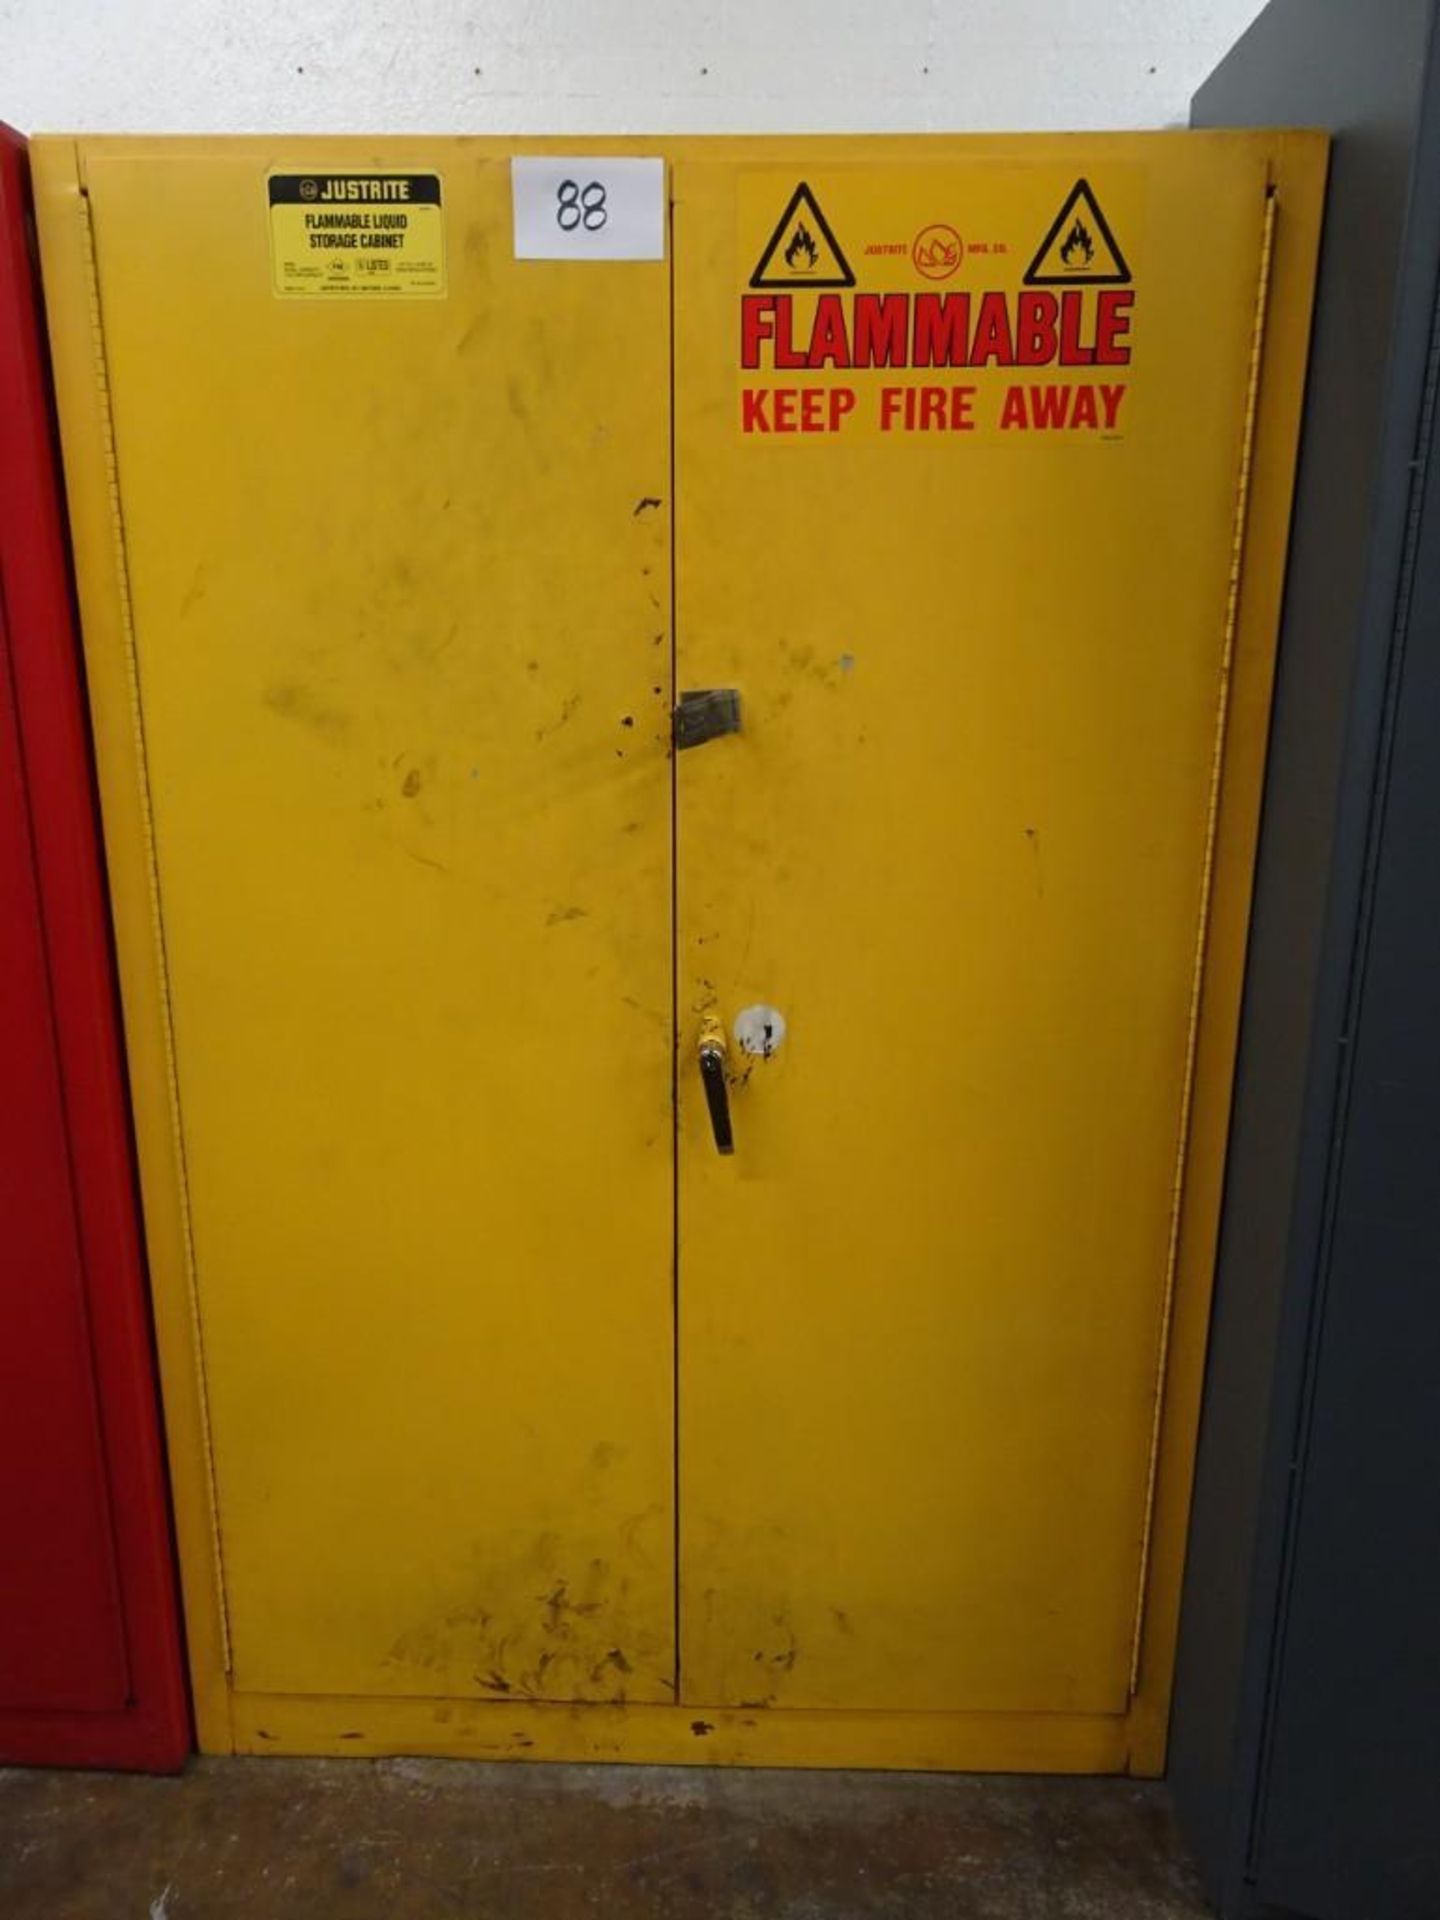 Justrite 25450 45 Gallon Capacity Flammable Storage Cabinet